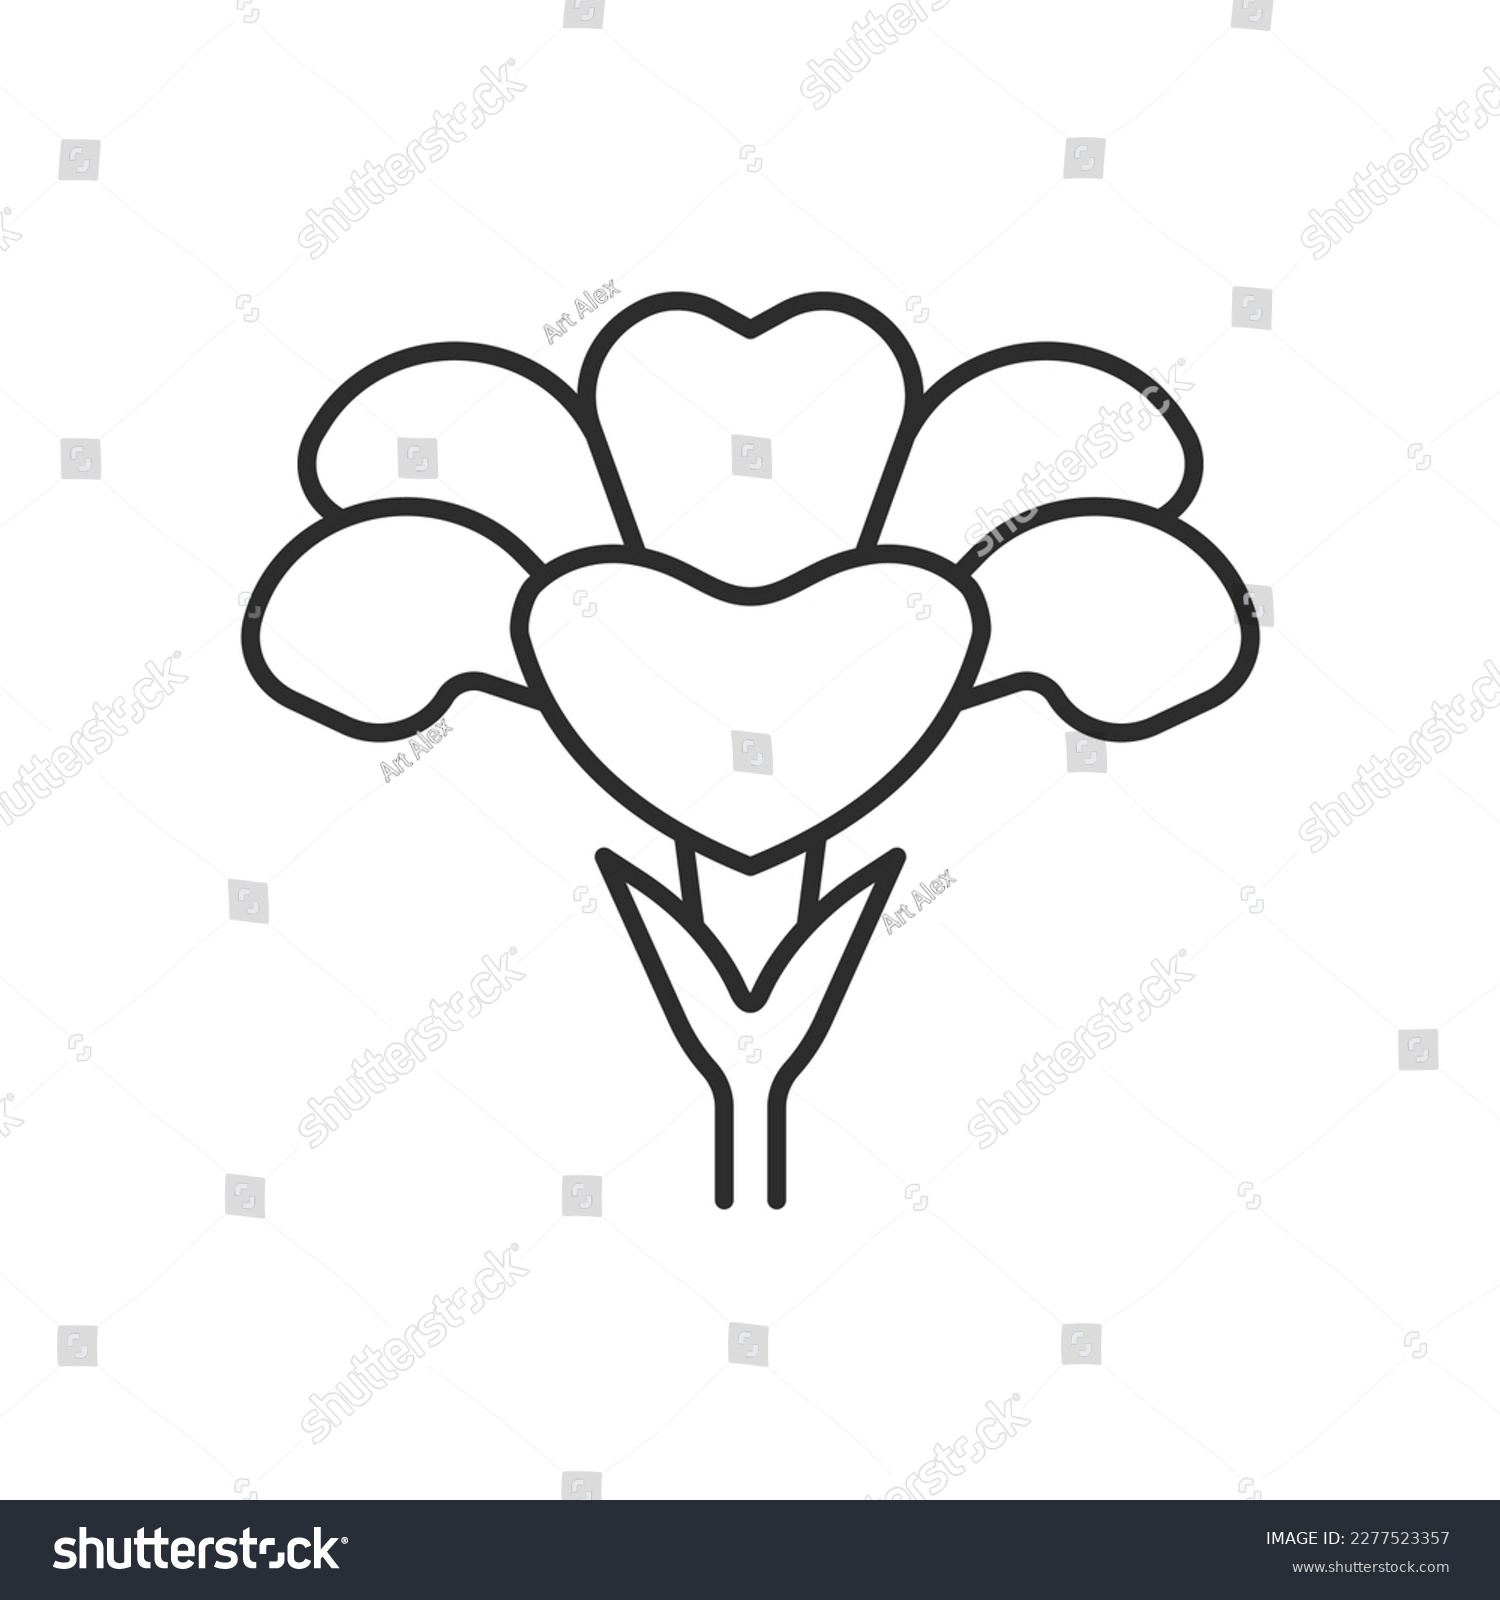 SVG of Petunia flower icon. High quality black vector illustration. svg